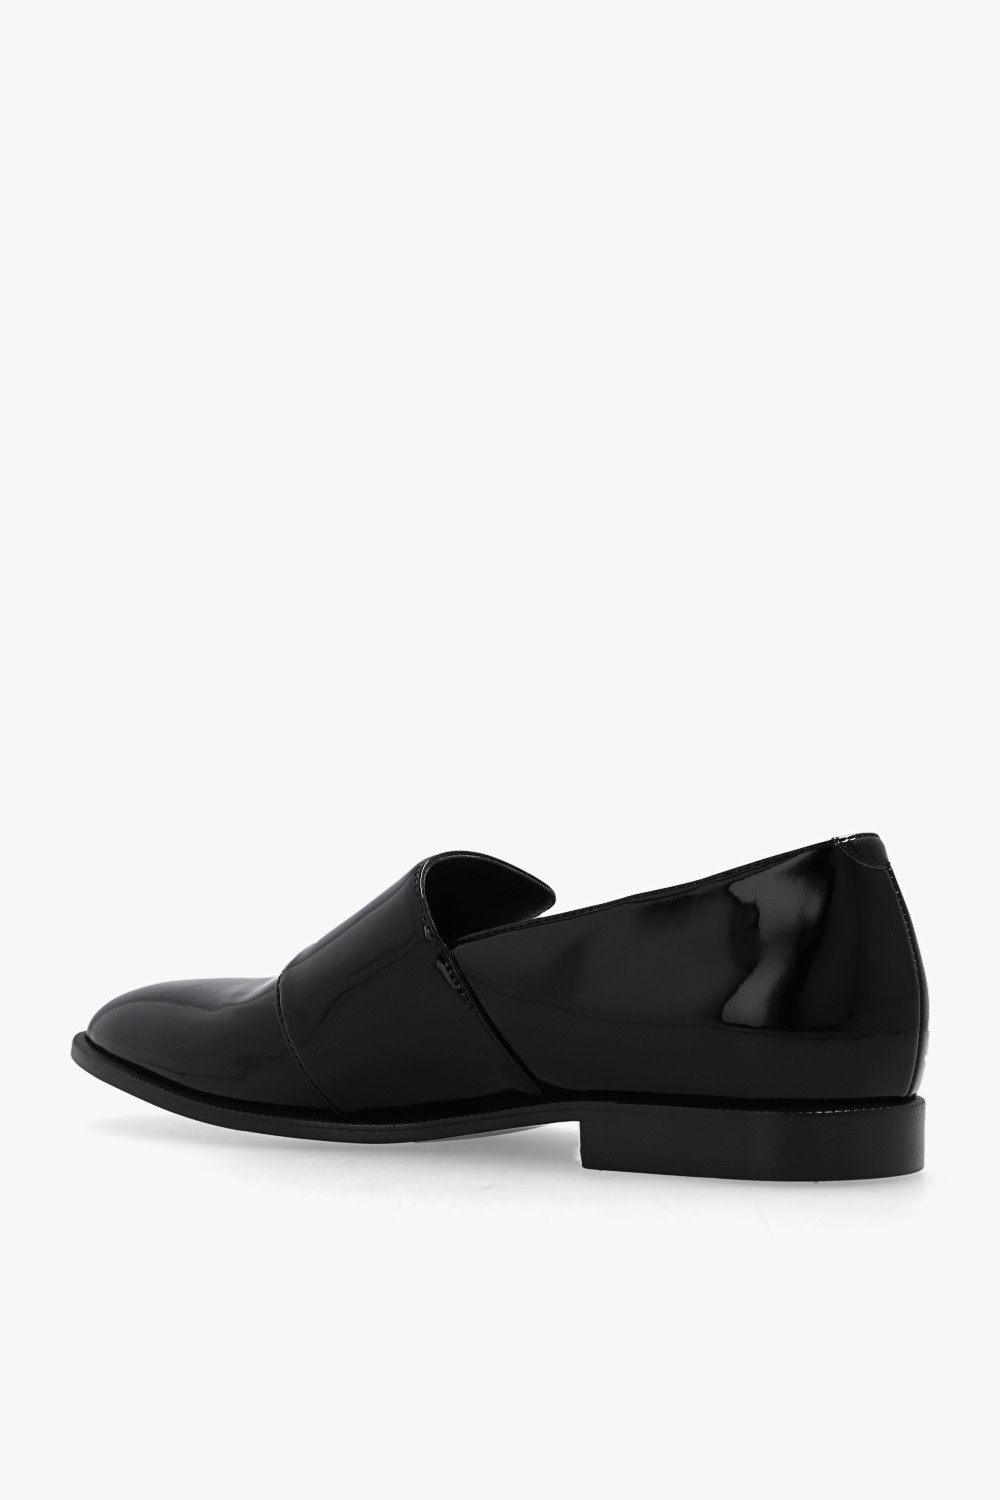 Giuseppe Zanotti ‘Flavio’ shoes